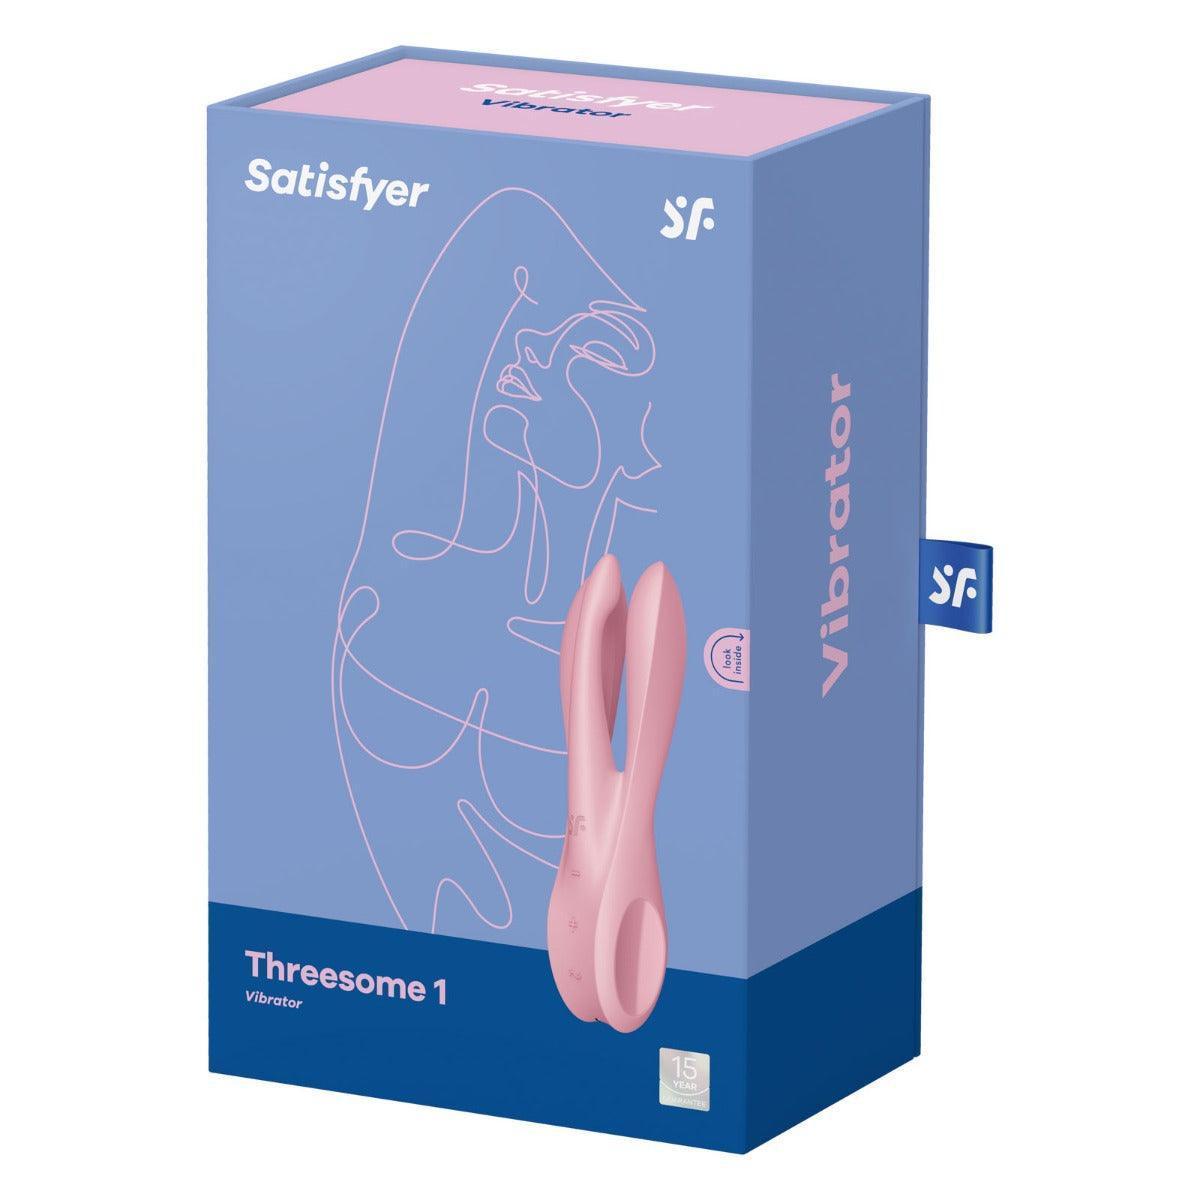 Satisfyer Threesome 1 Vibrator pink